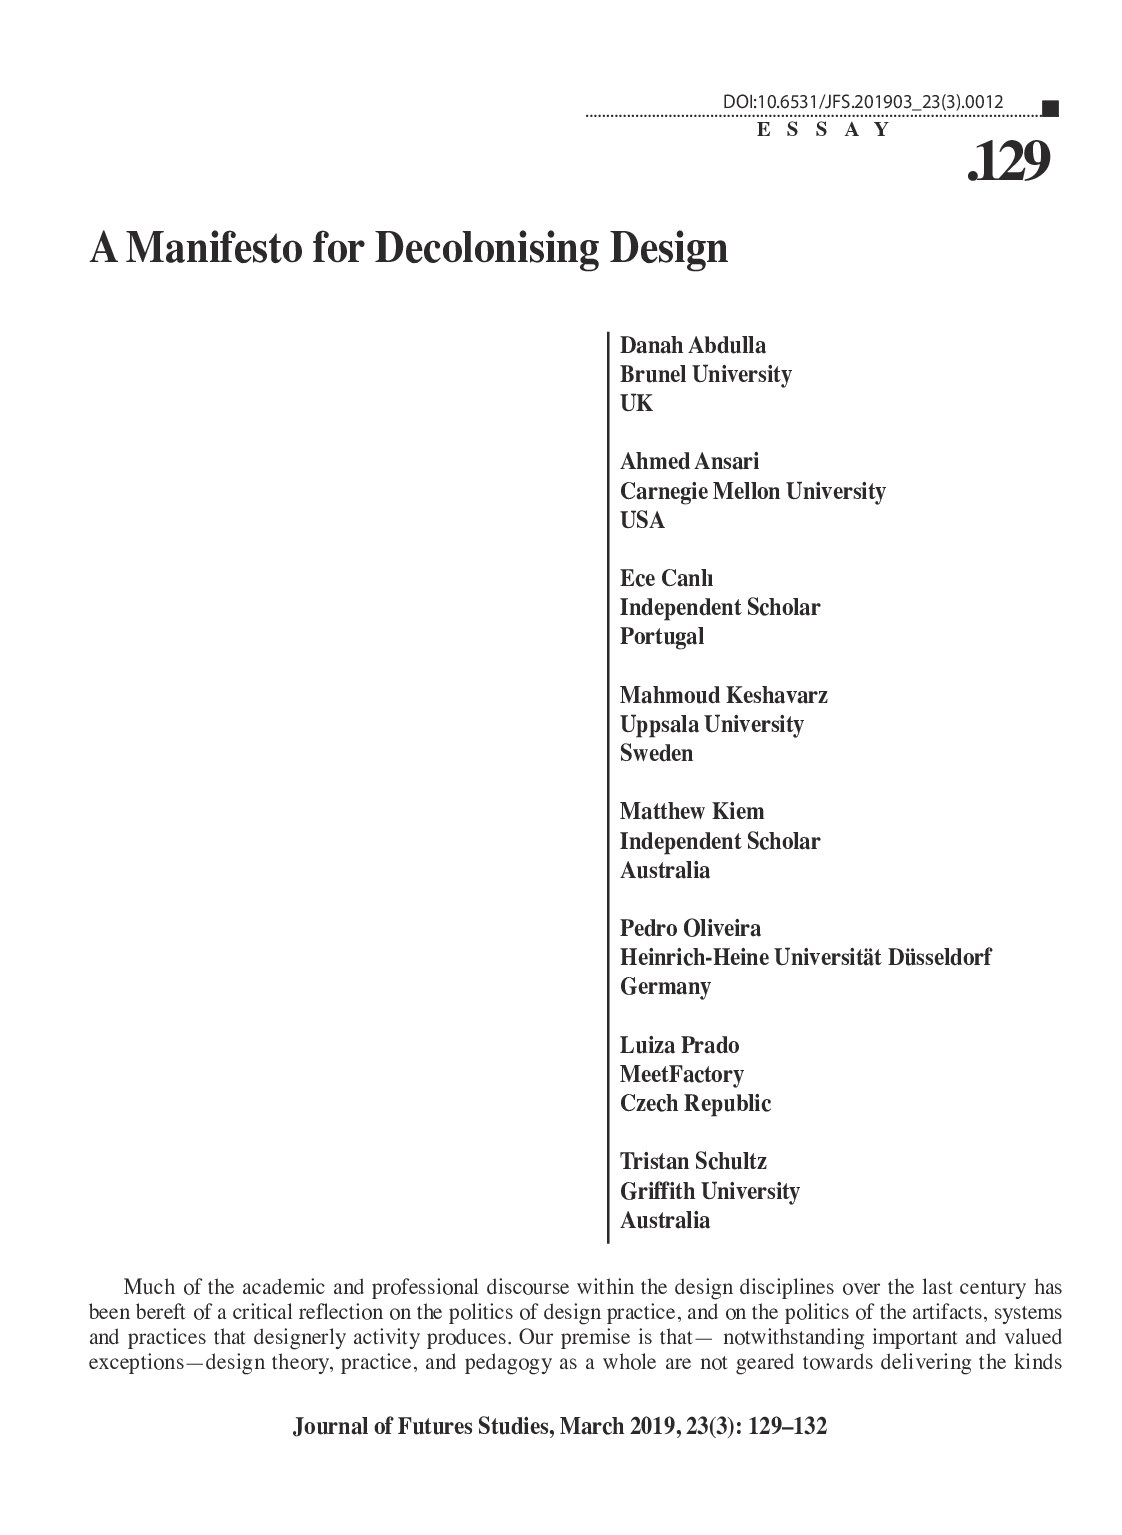 A Manifesto for Decolonising Design